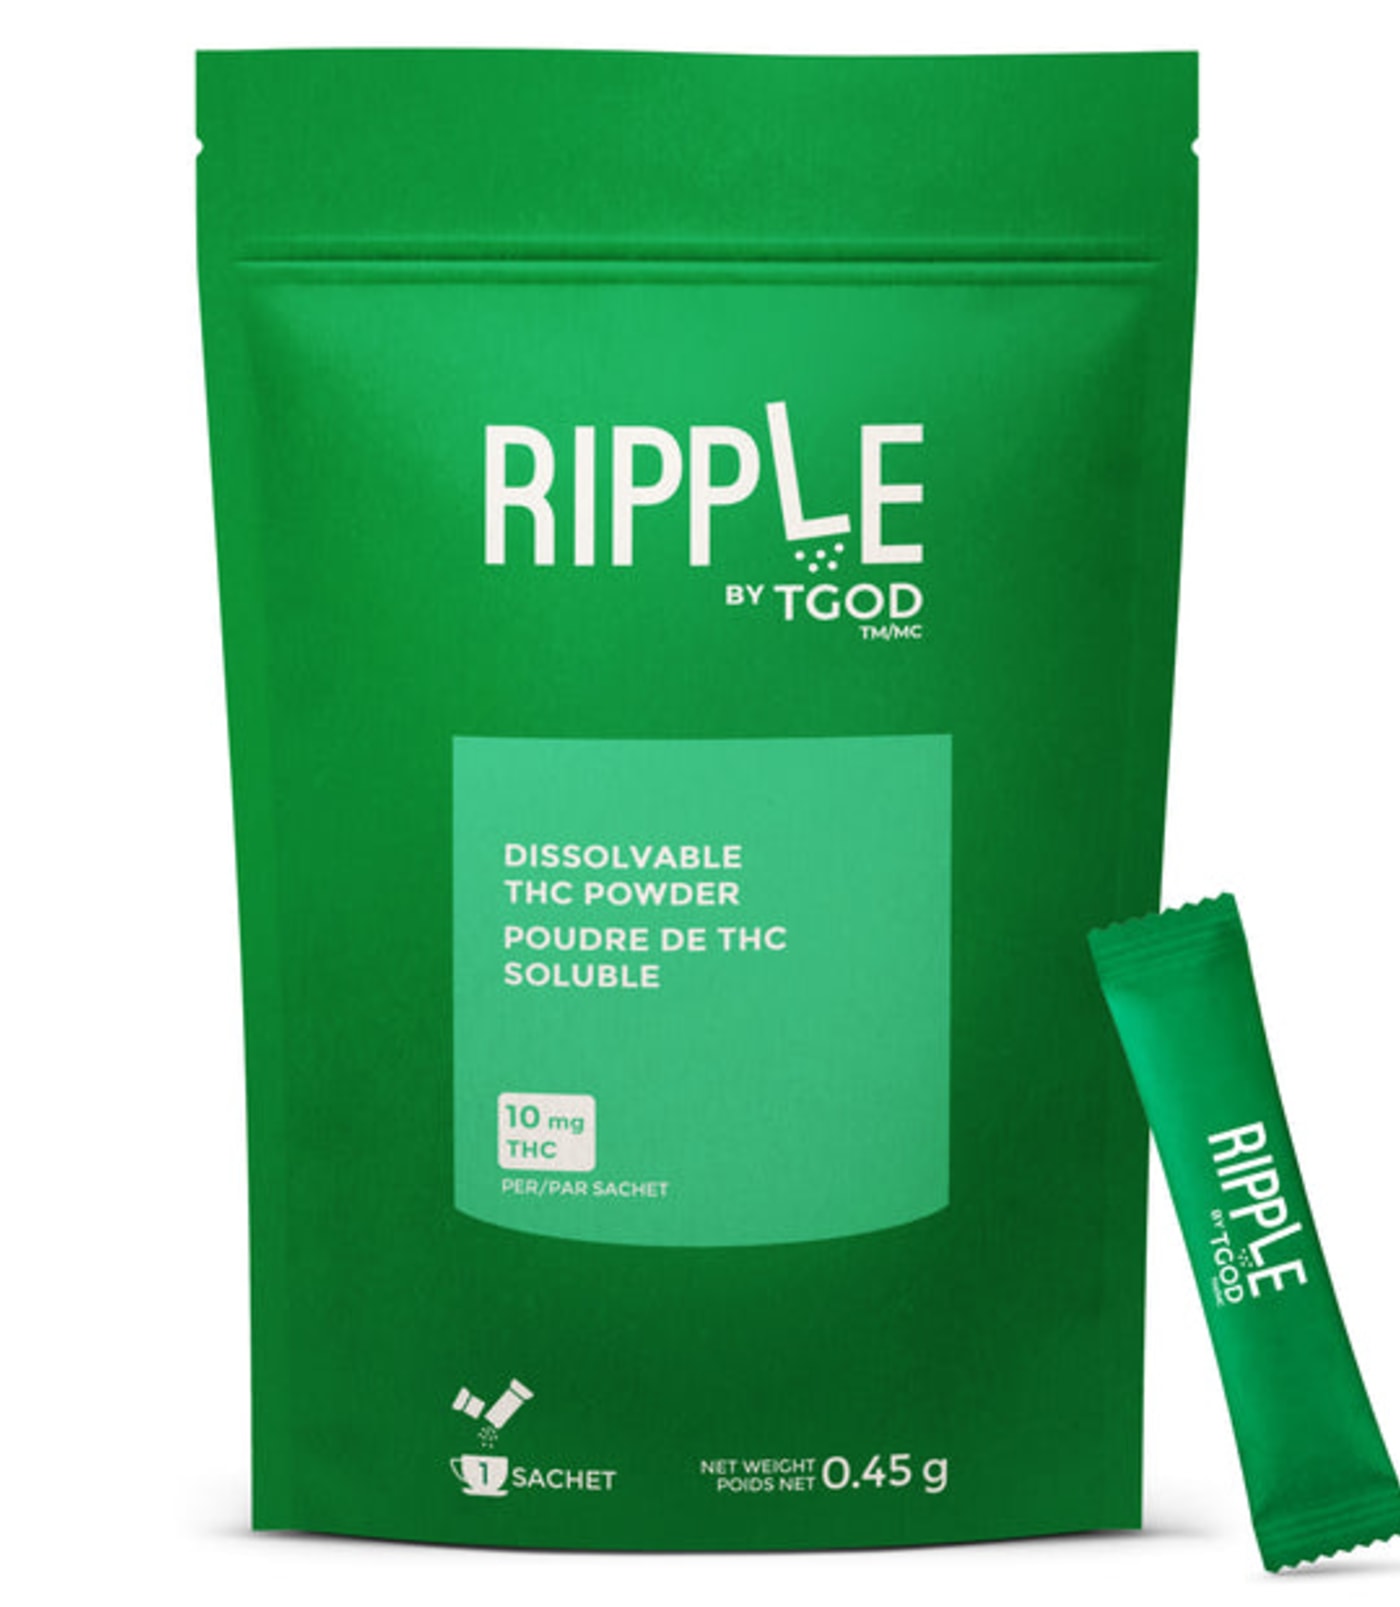 Ripple Dissolvable THC Powder by The Green Organic Dutchman